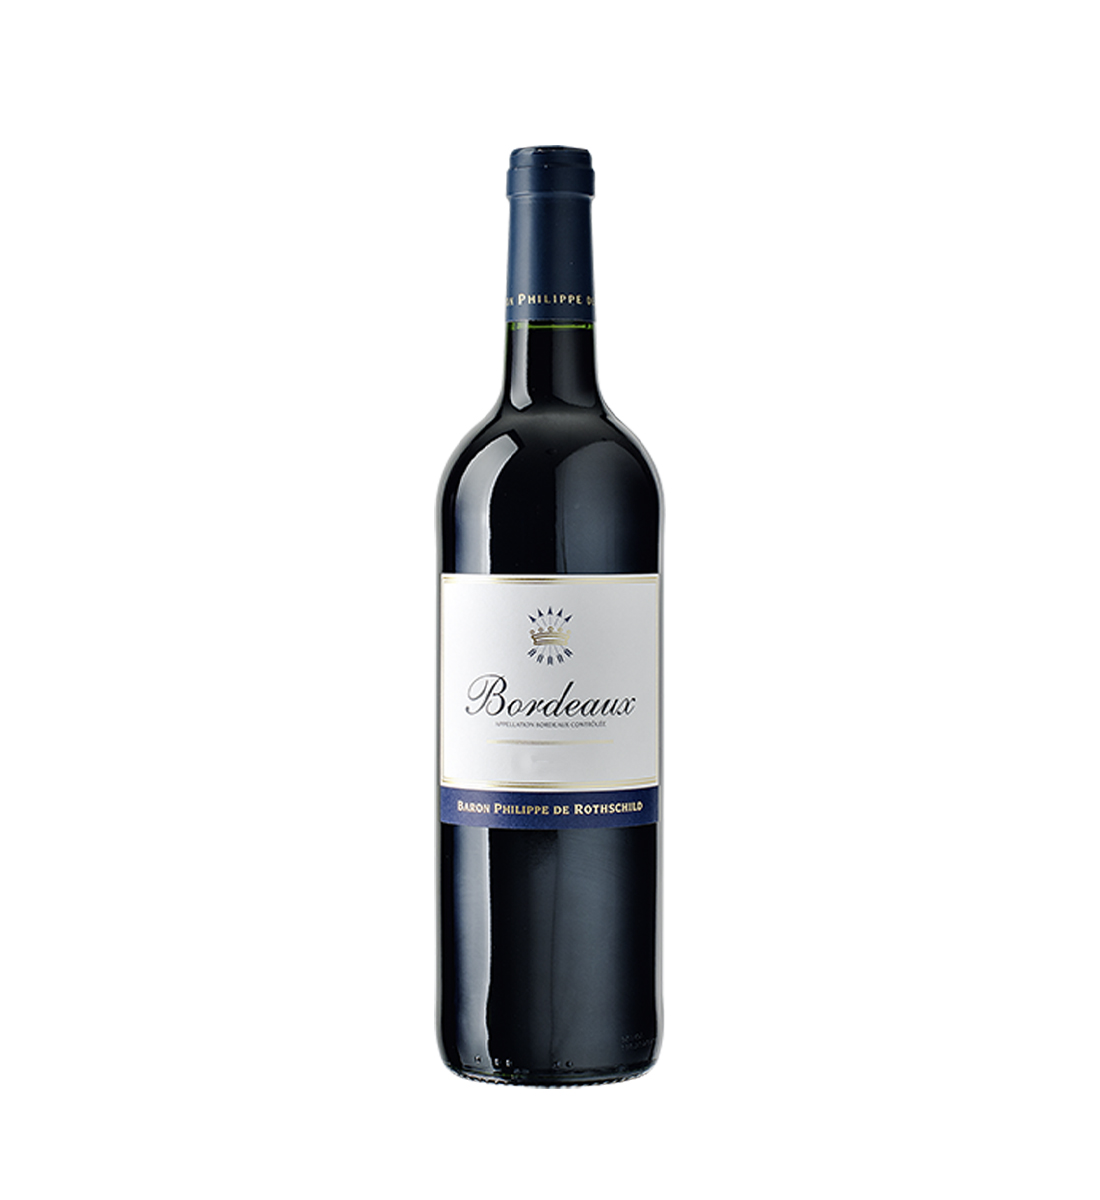 Baron Philippe de Rothschild Bordeaux Cabernet Franc, Cabernet Sauvignon & Merlot - Vin Sec Rosu - Franta - 0.75L